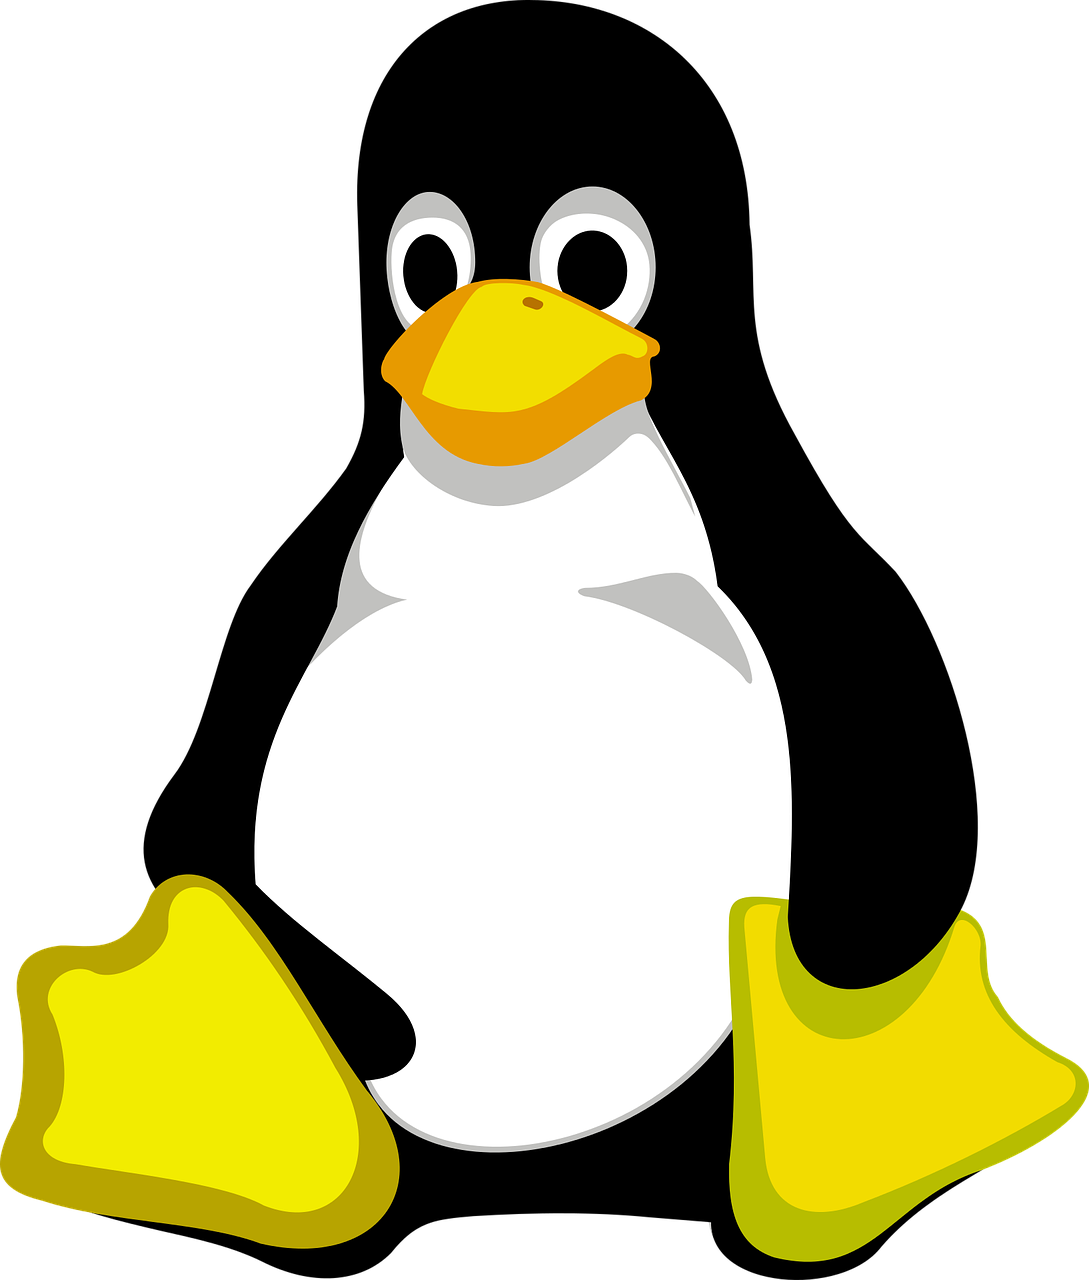 Linux: 5 Command Line Basics for Developers (part 1)